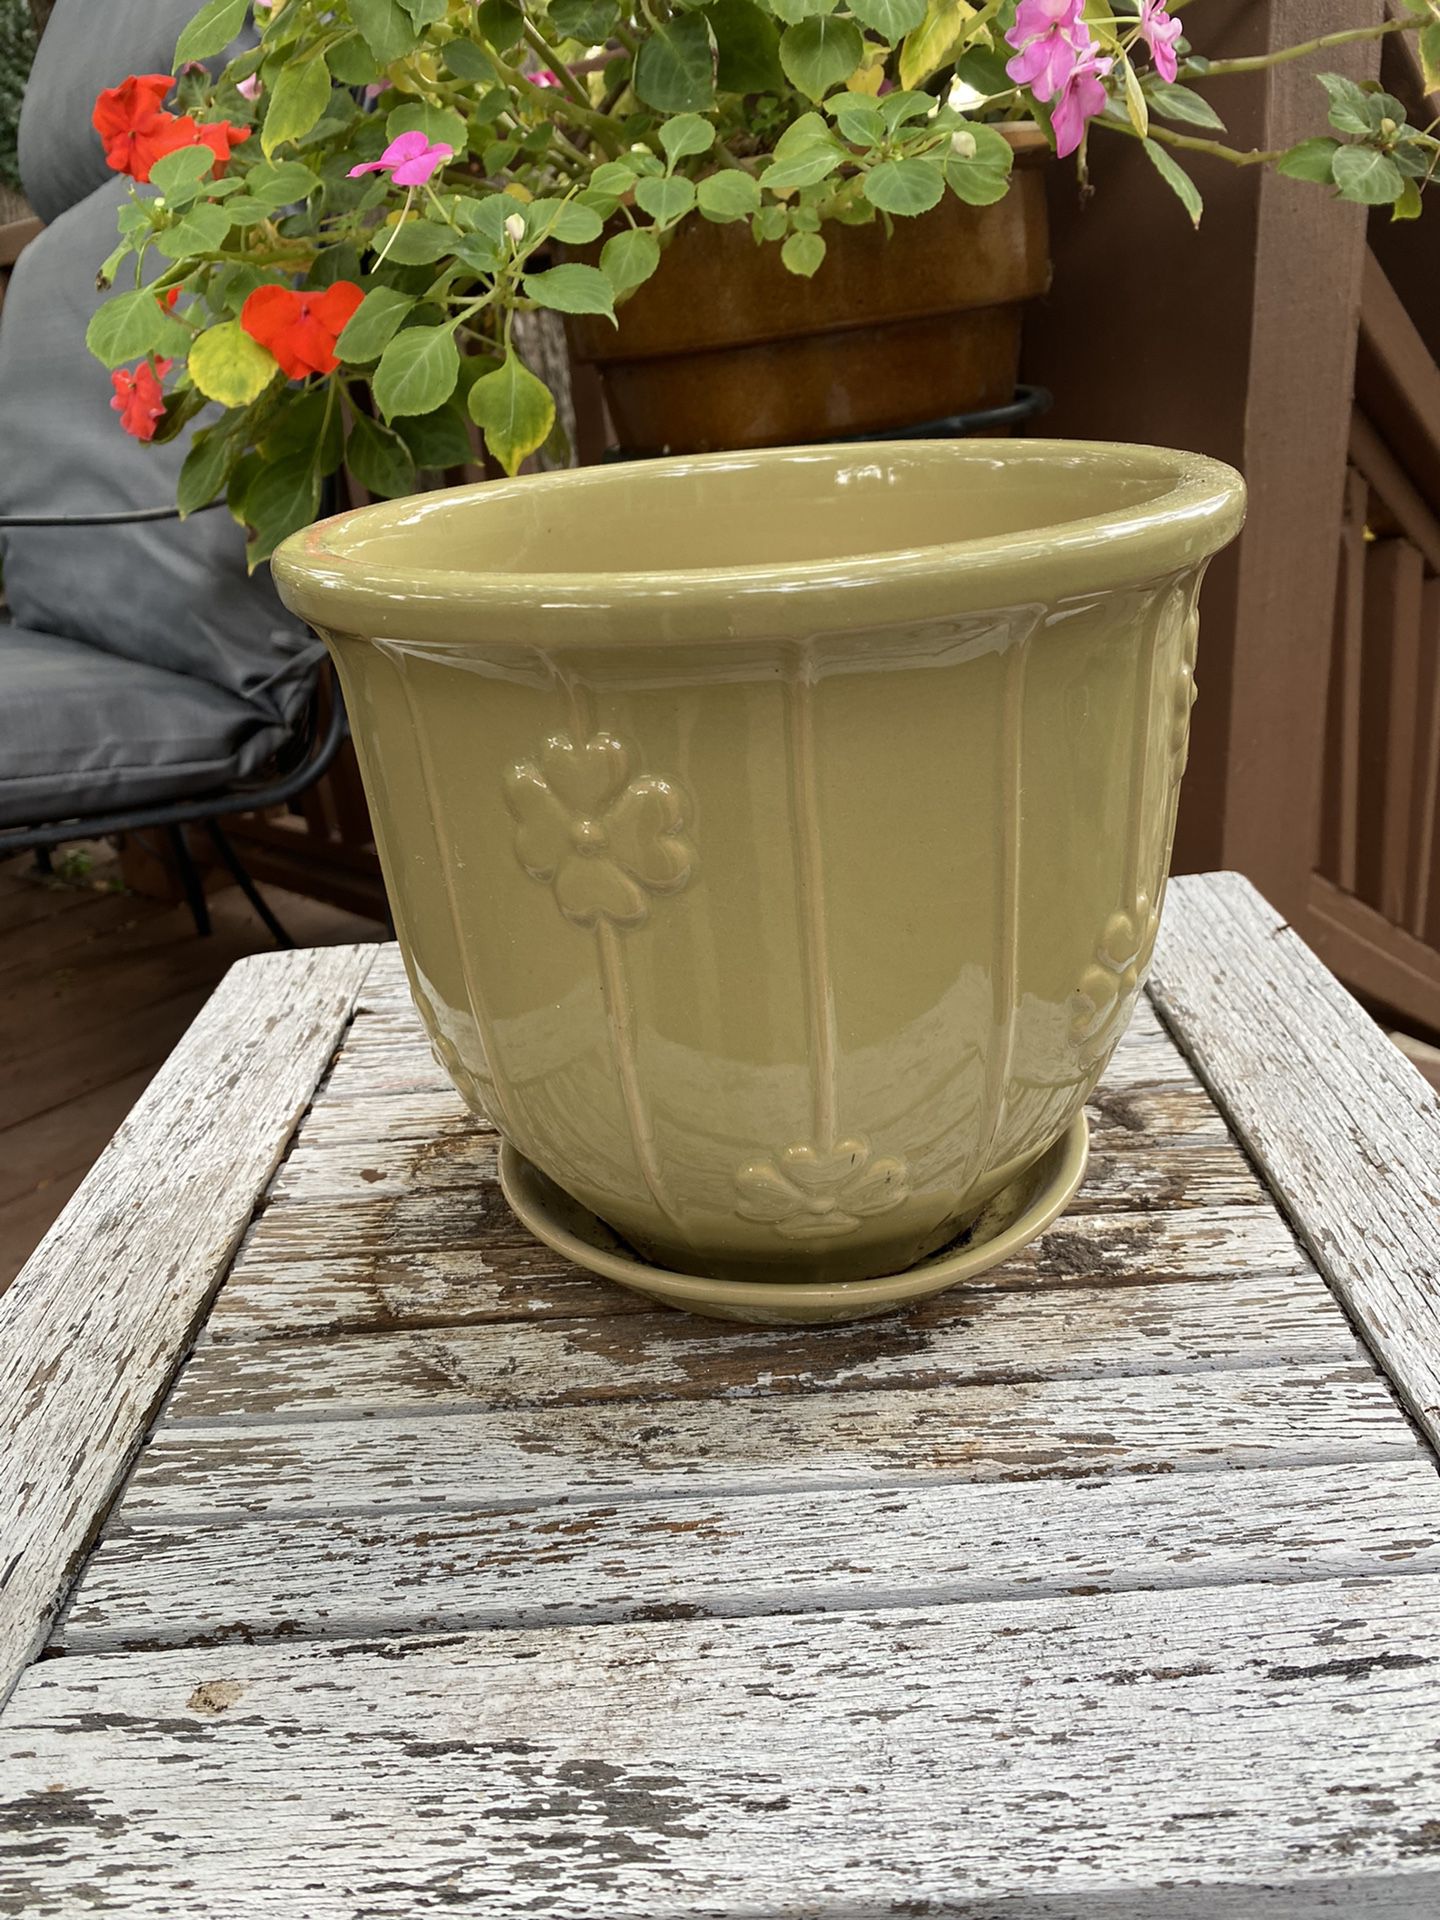 Ceramic planter pot